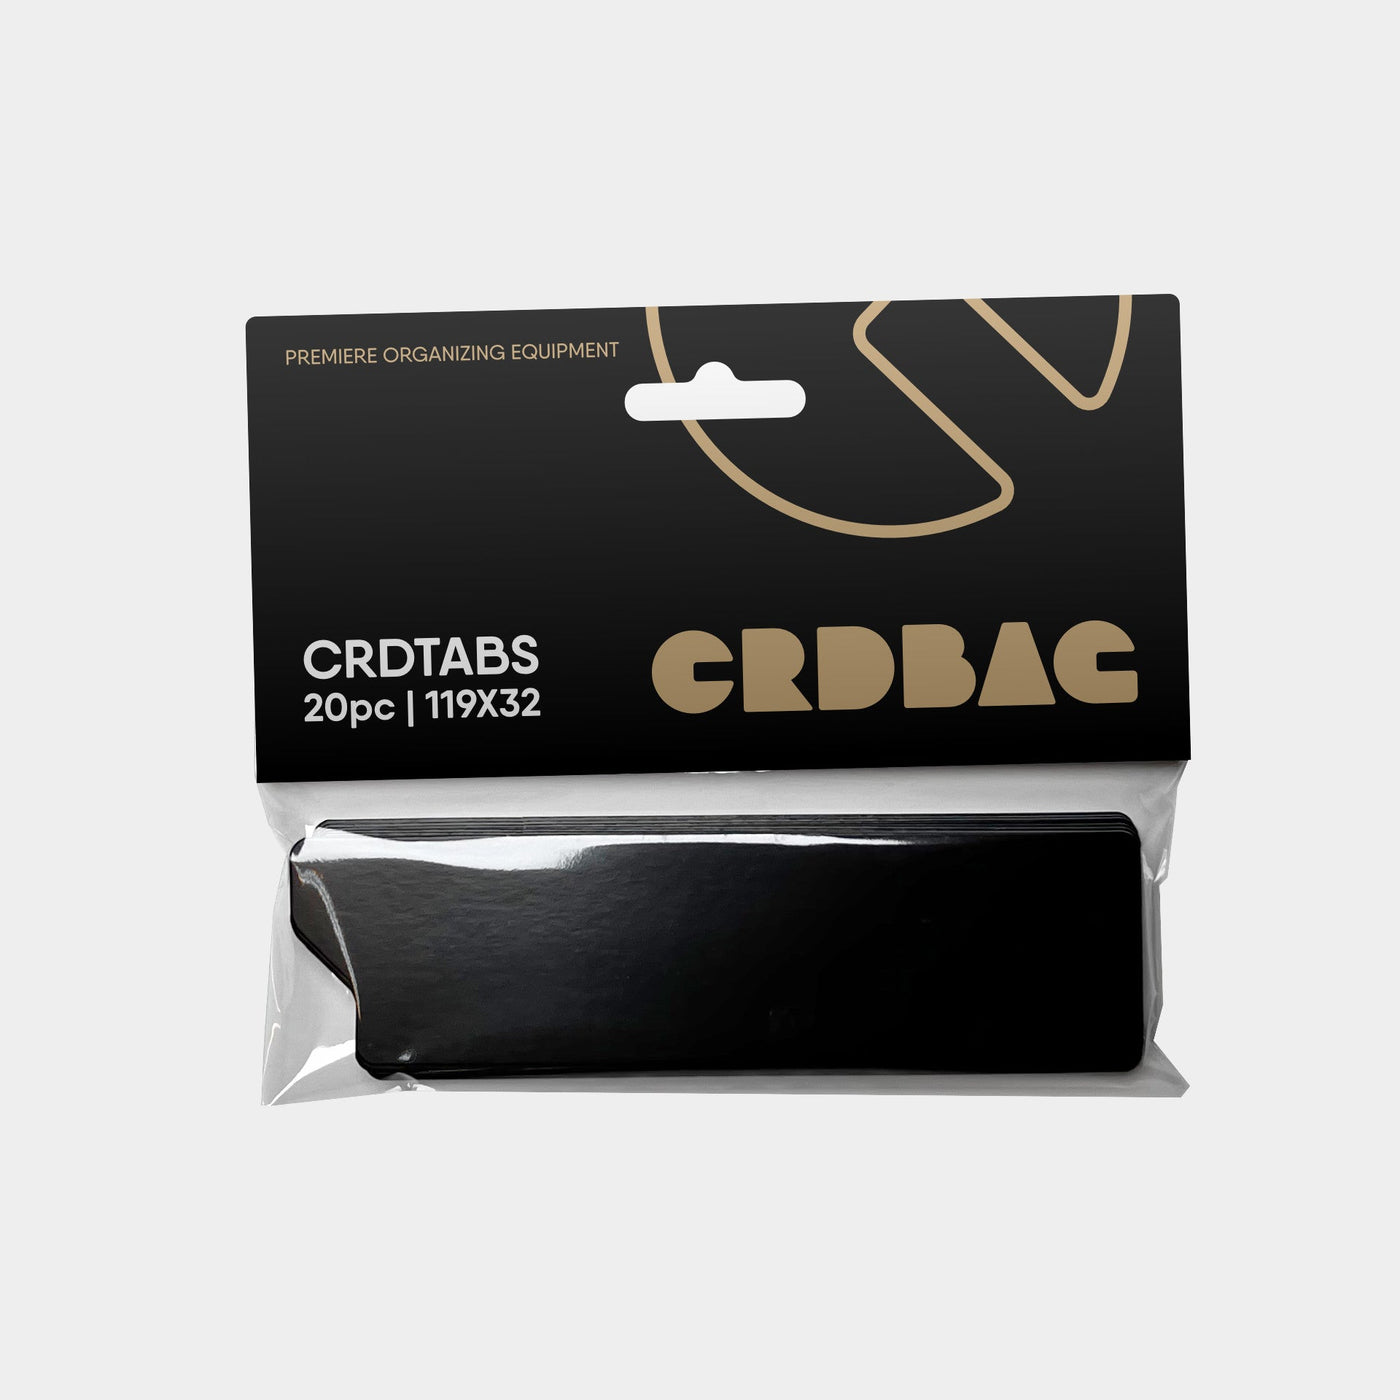 CRDTABS - CRDBAG